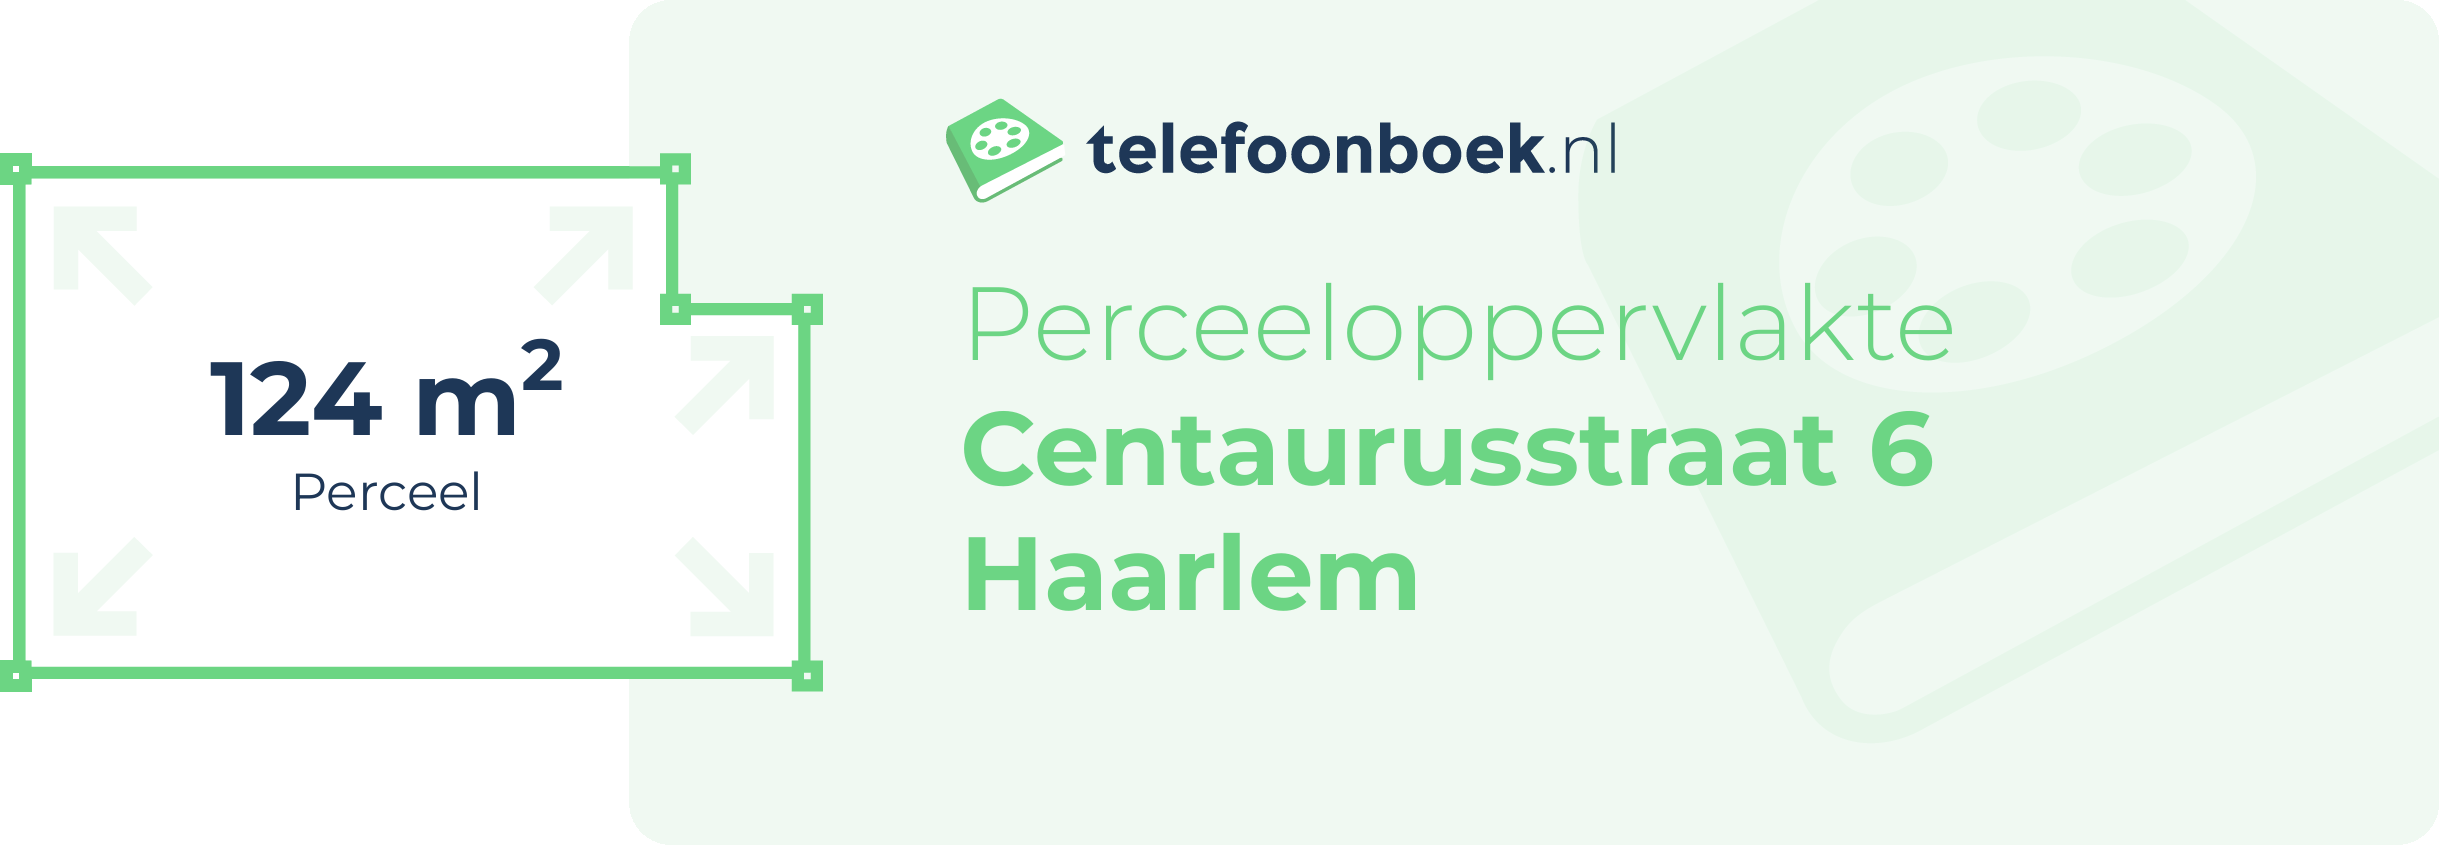 Perceeloppervlakte Centaurusstraat 6 Haarlem